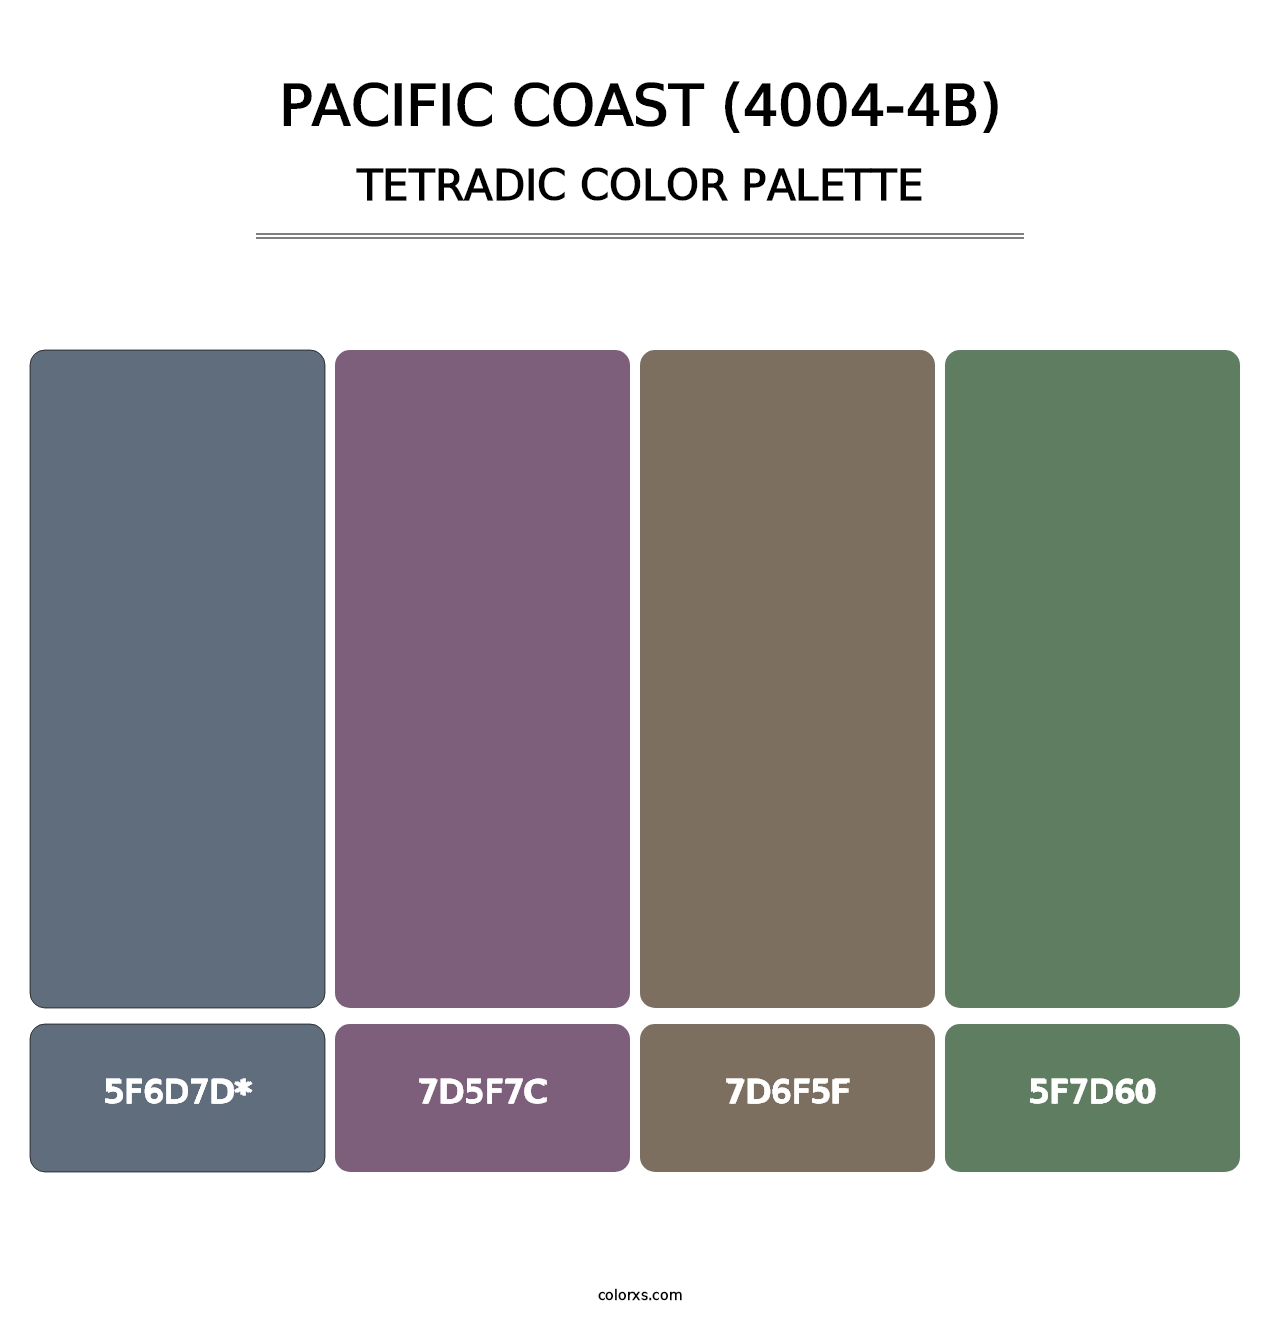 Pacific Coast (4004-4B) - Tetradic Color Palette